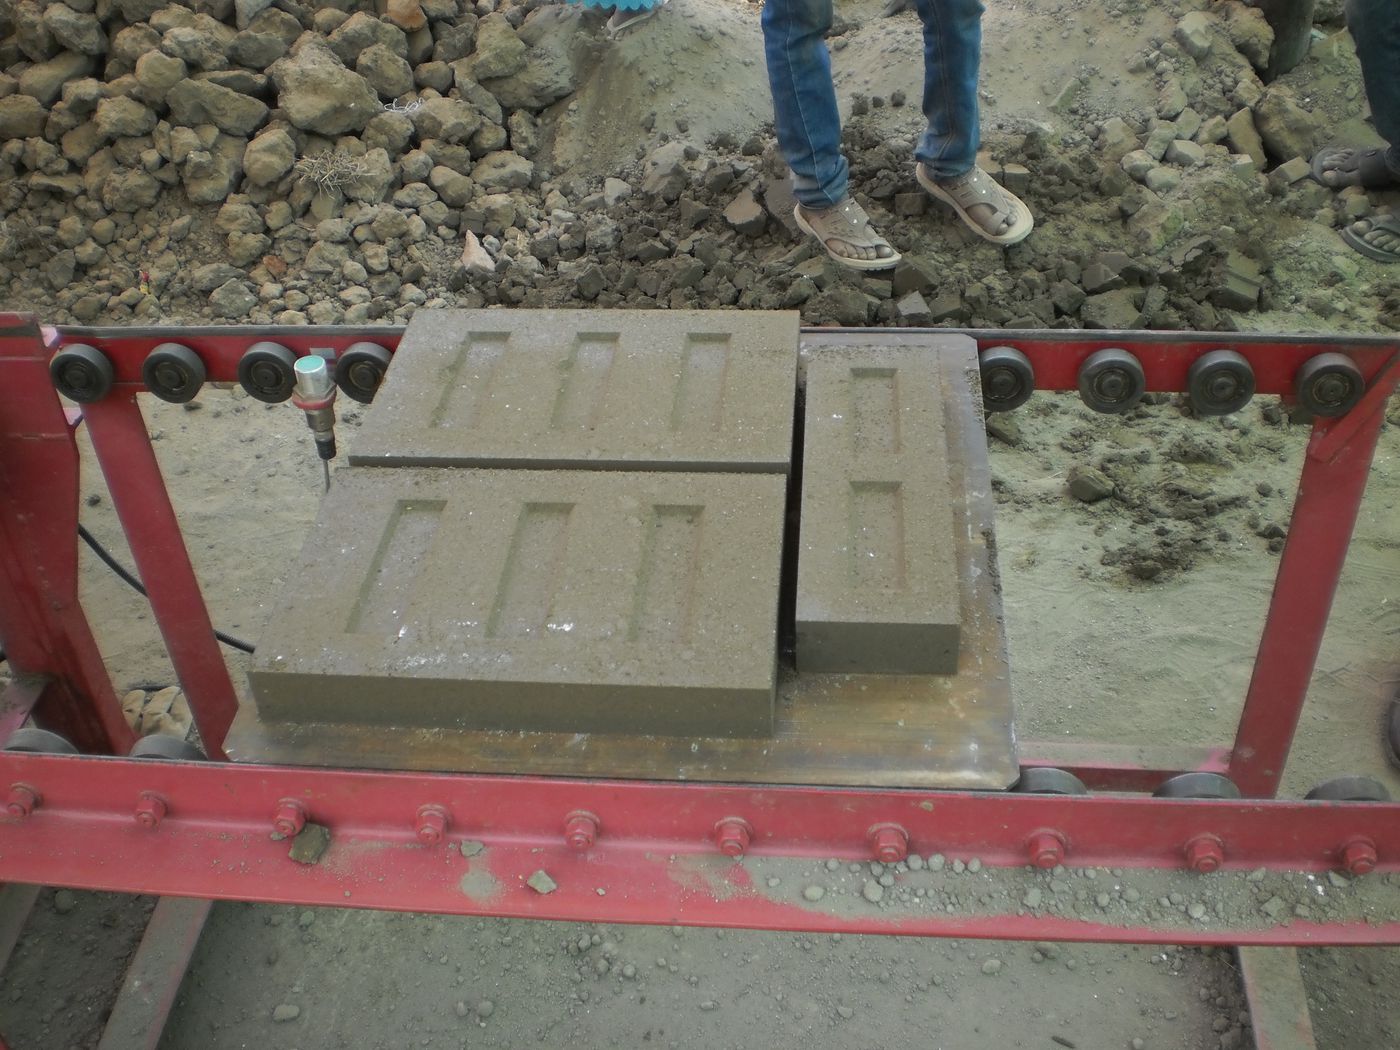 House in Ahmedabad : pressed-earth bricks on-site